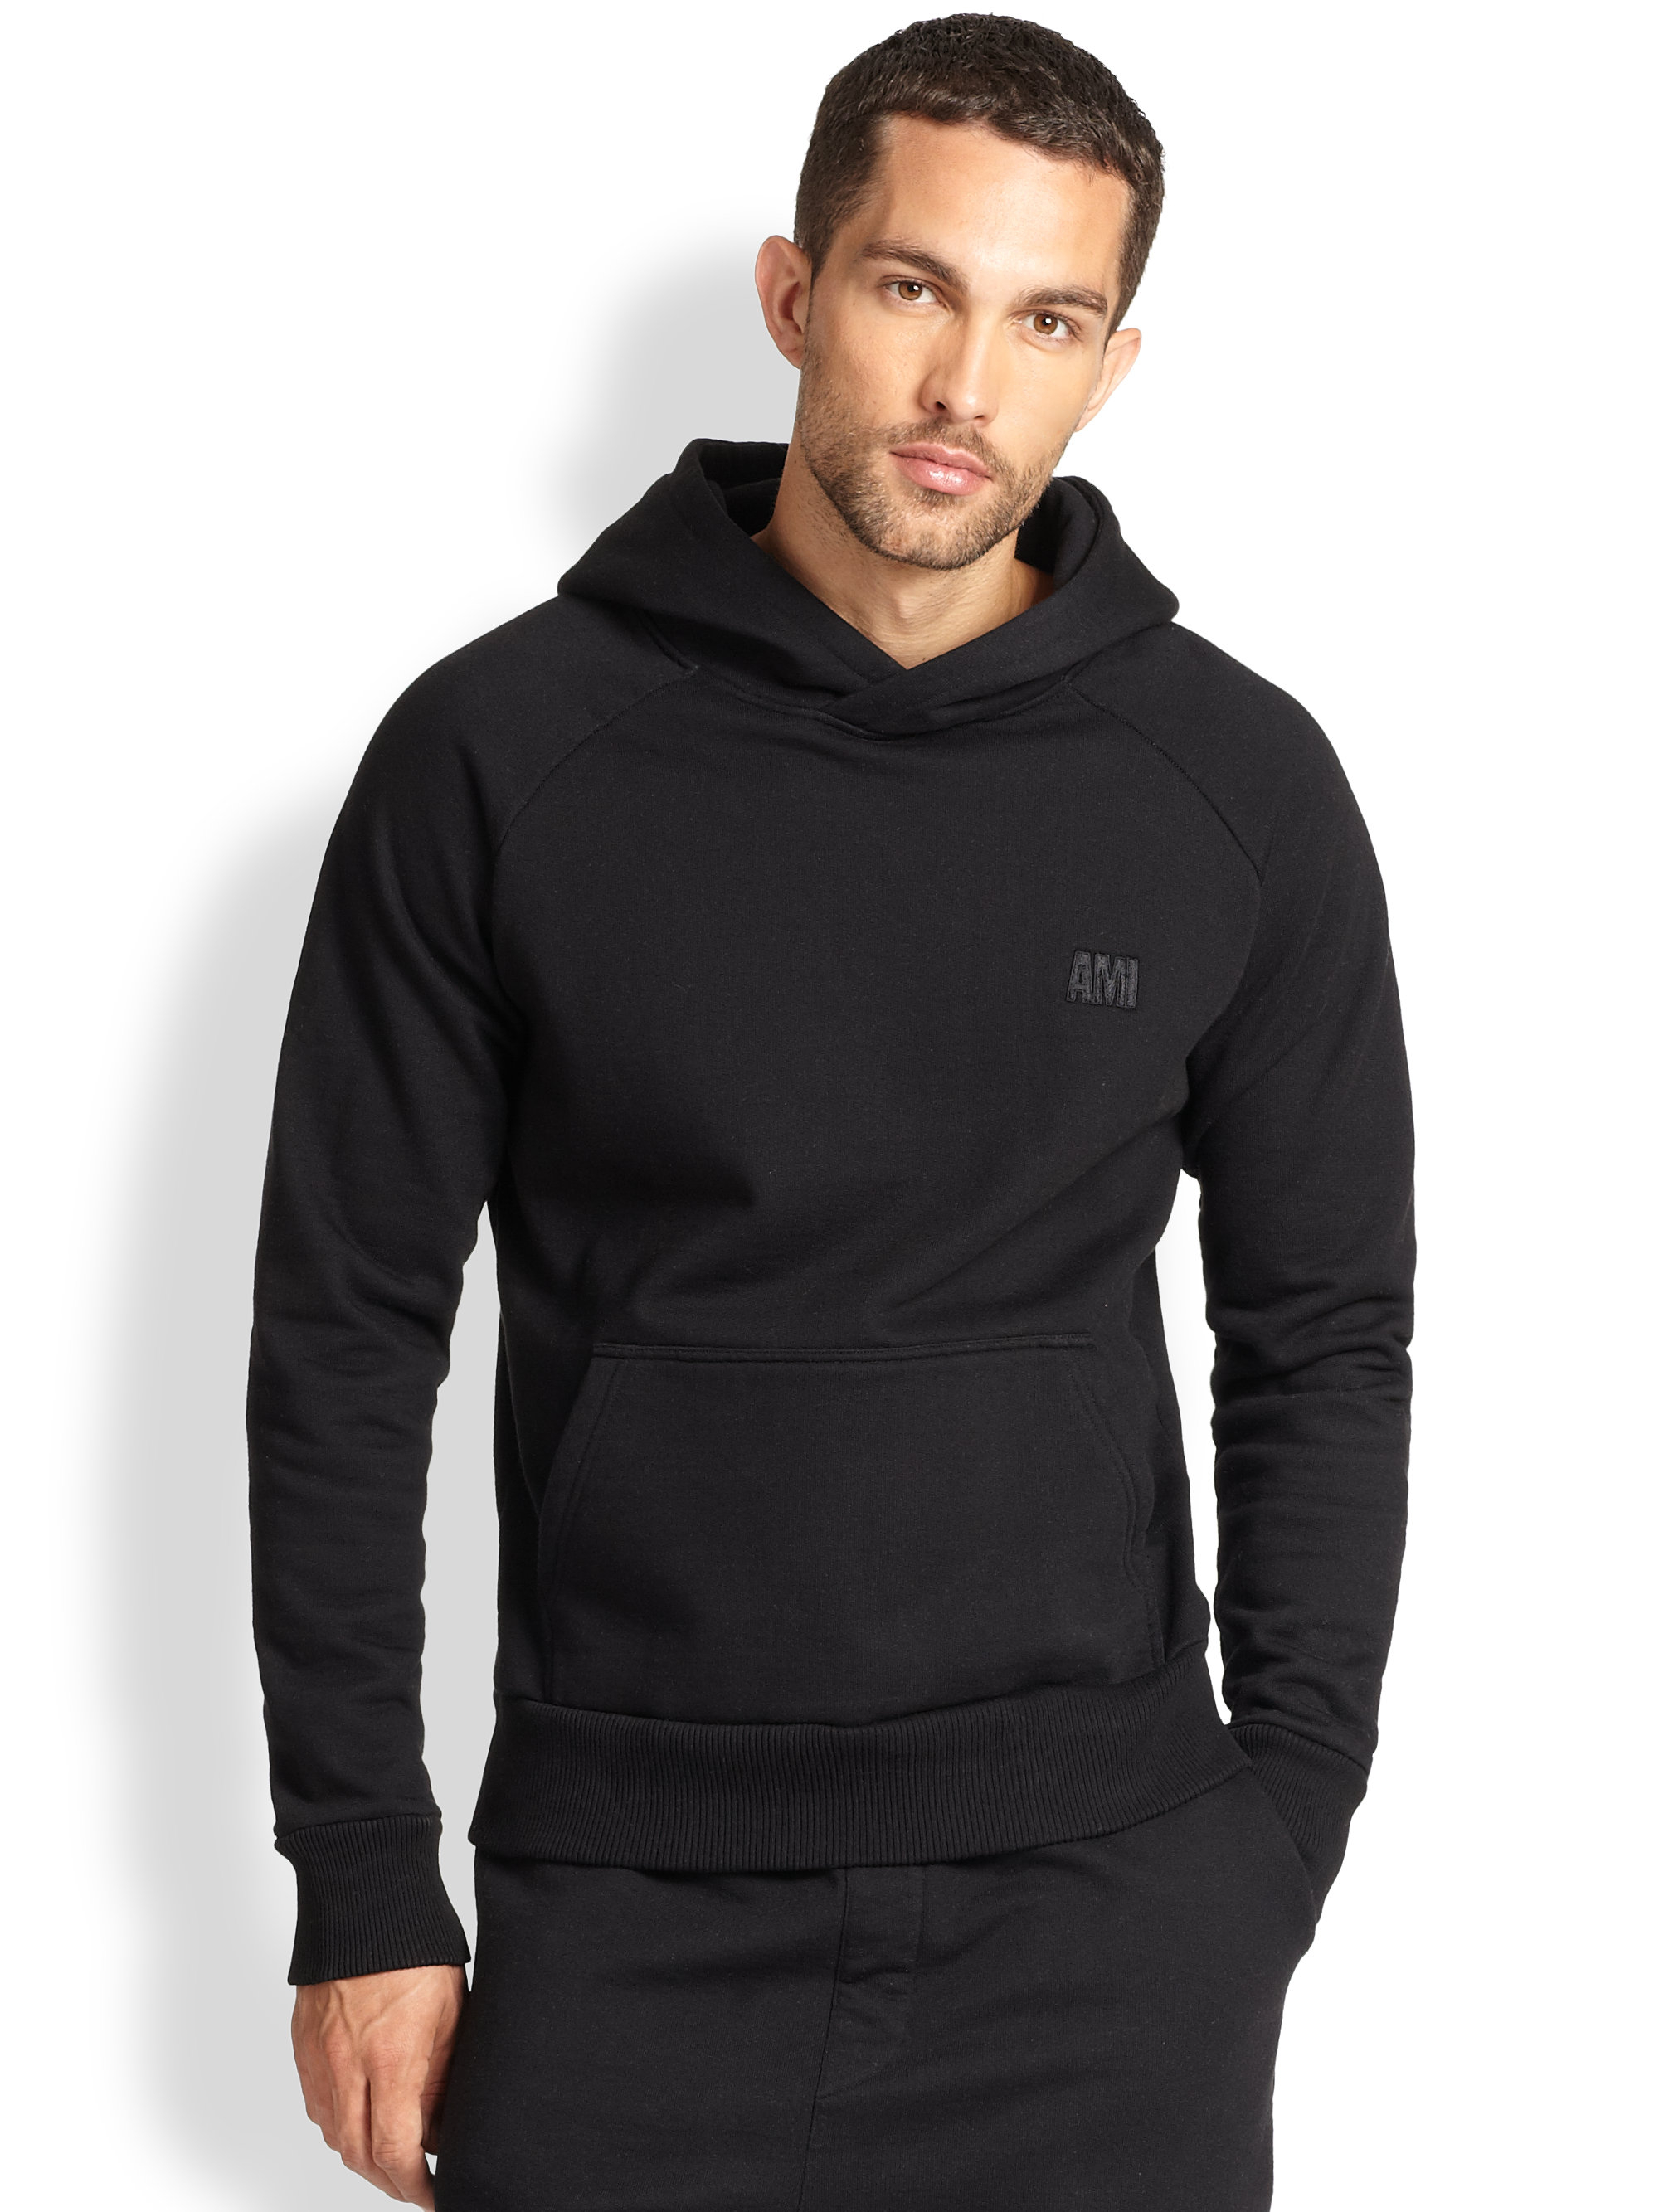 Lyst - Ami Hooded Sweatshirt in Black for Men